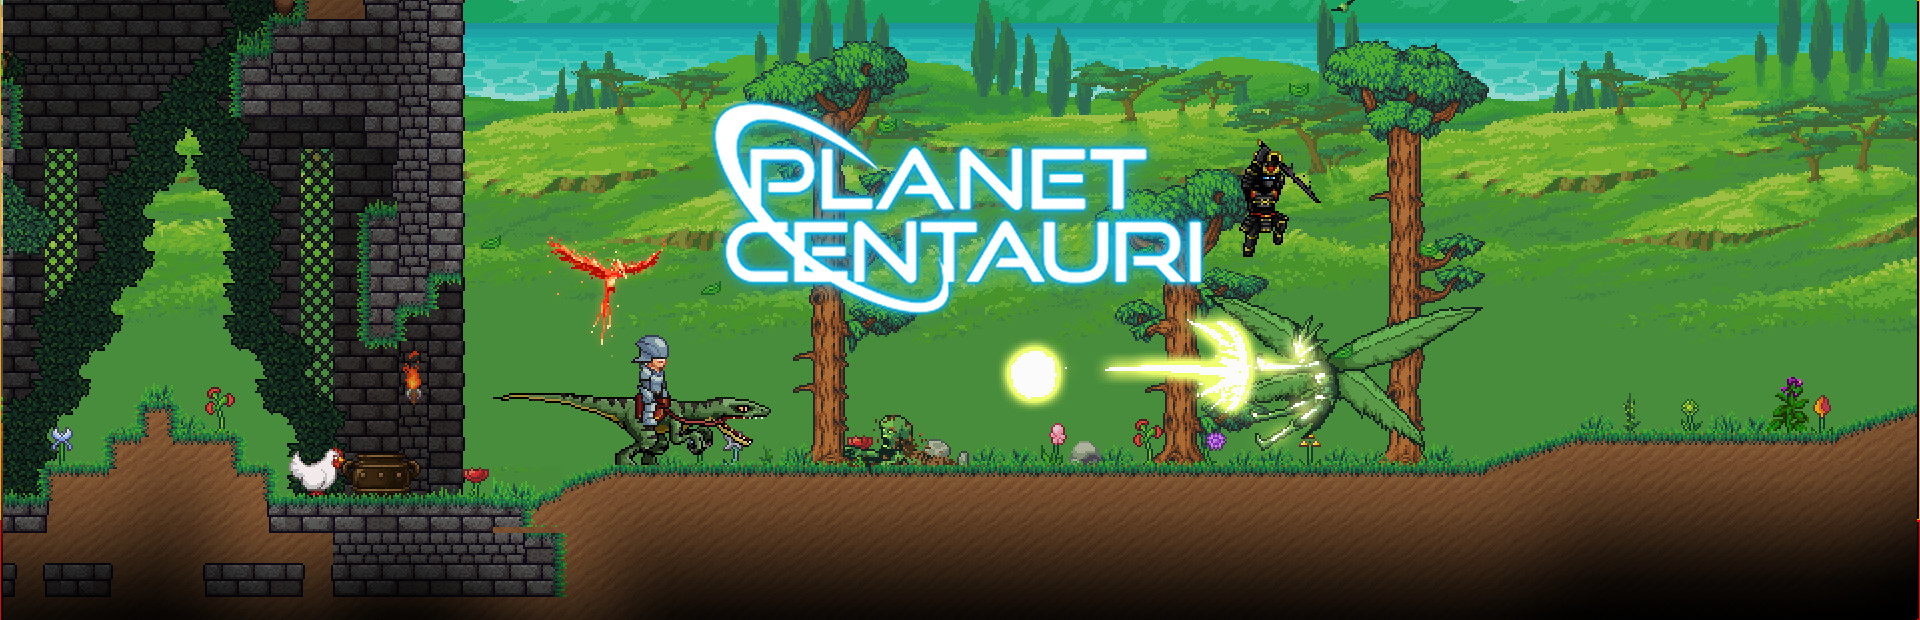 Planet Centauri cover image